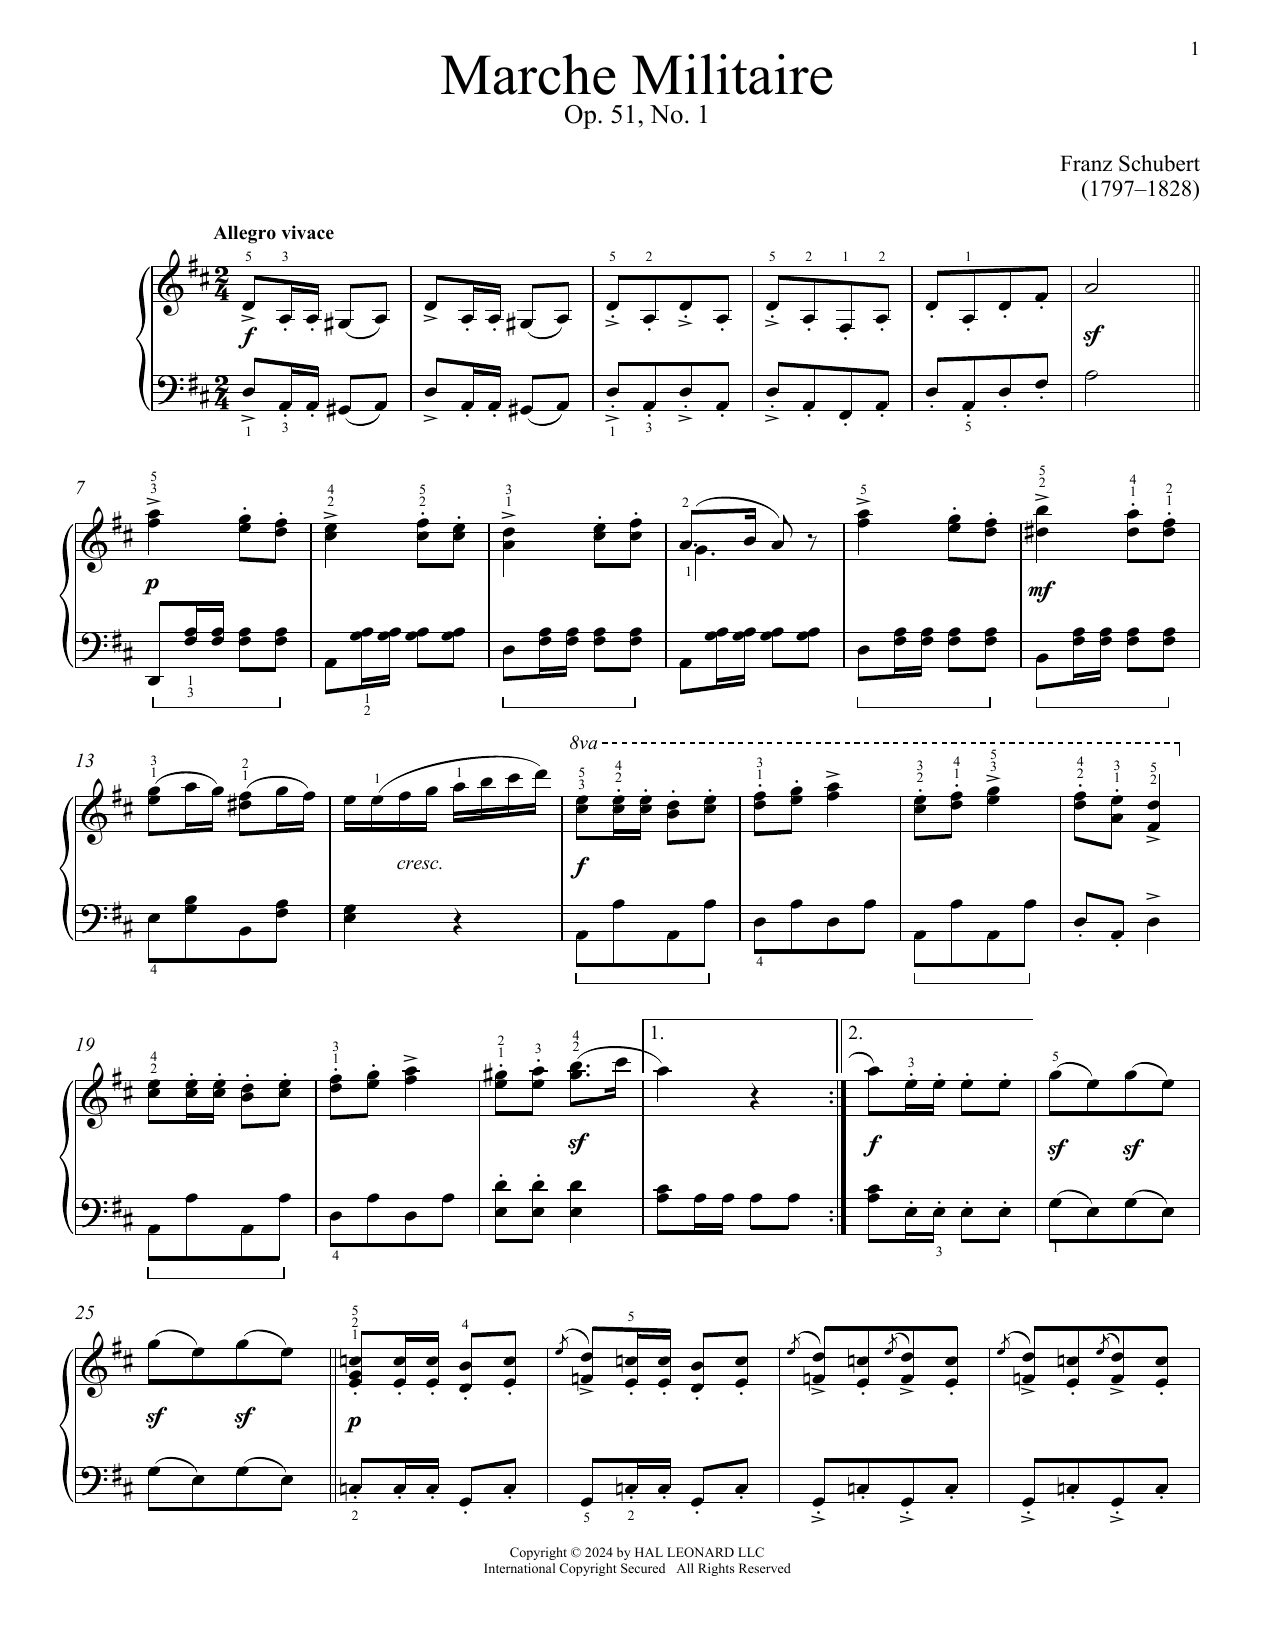 Franz Schubert Marche Militaire, Op. 51, No. 1 sheet music notes printable PDF score